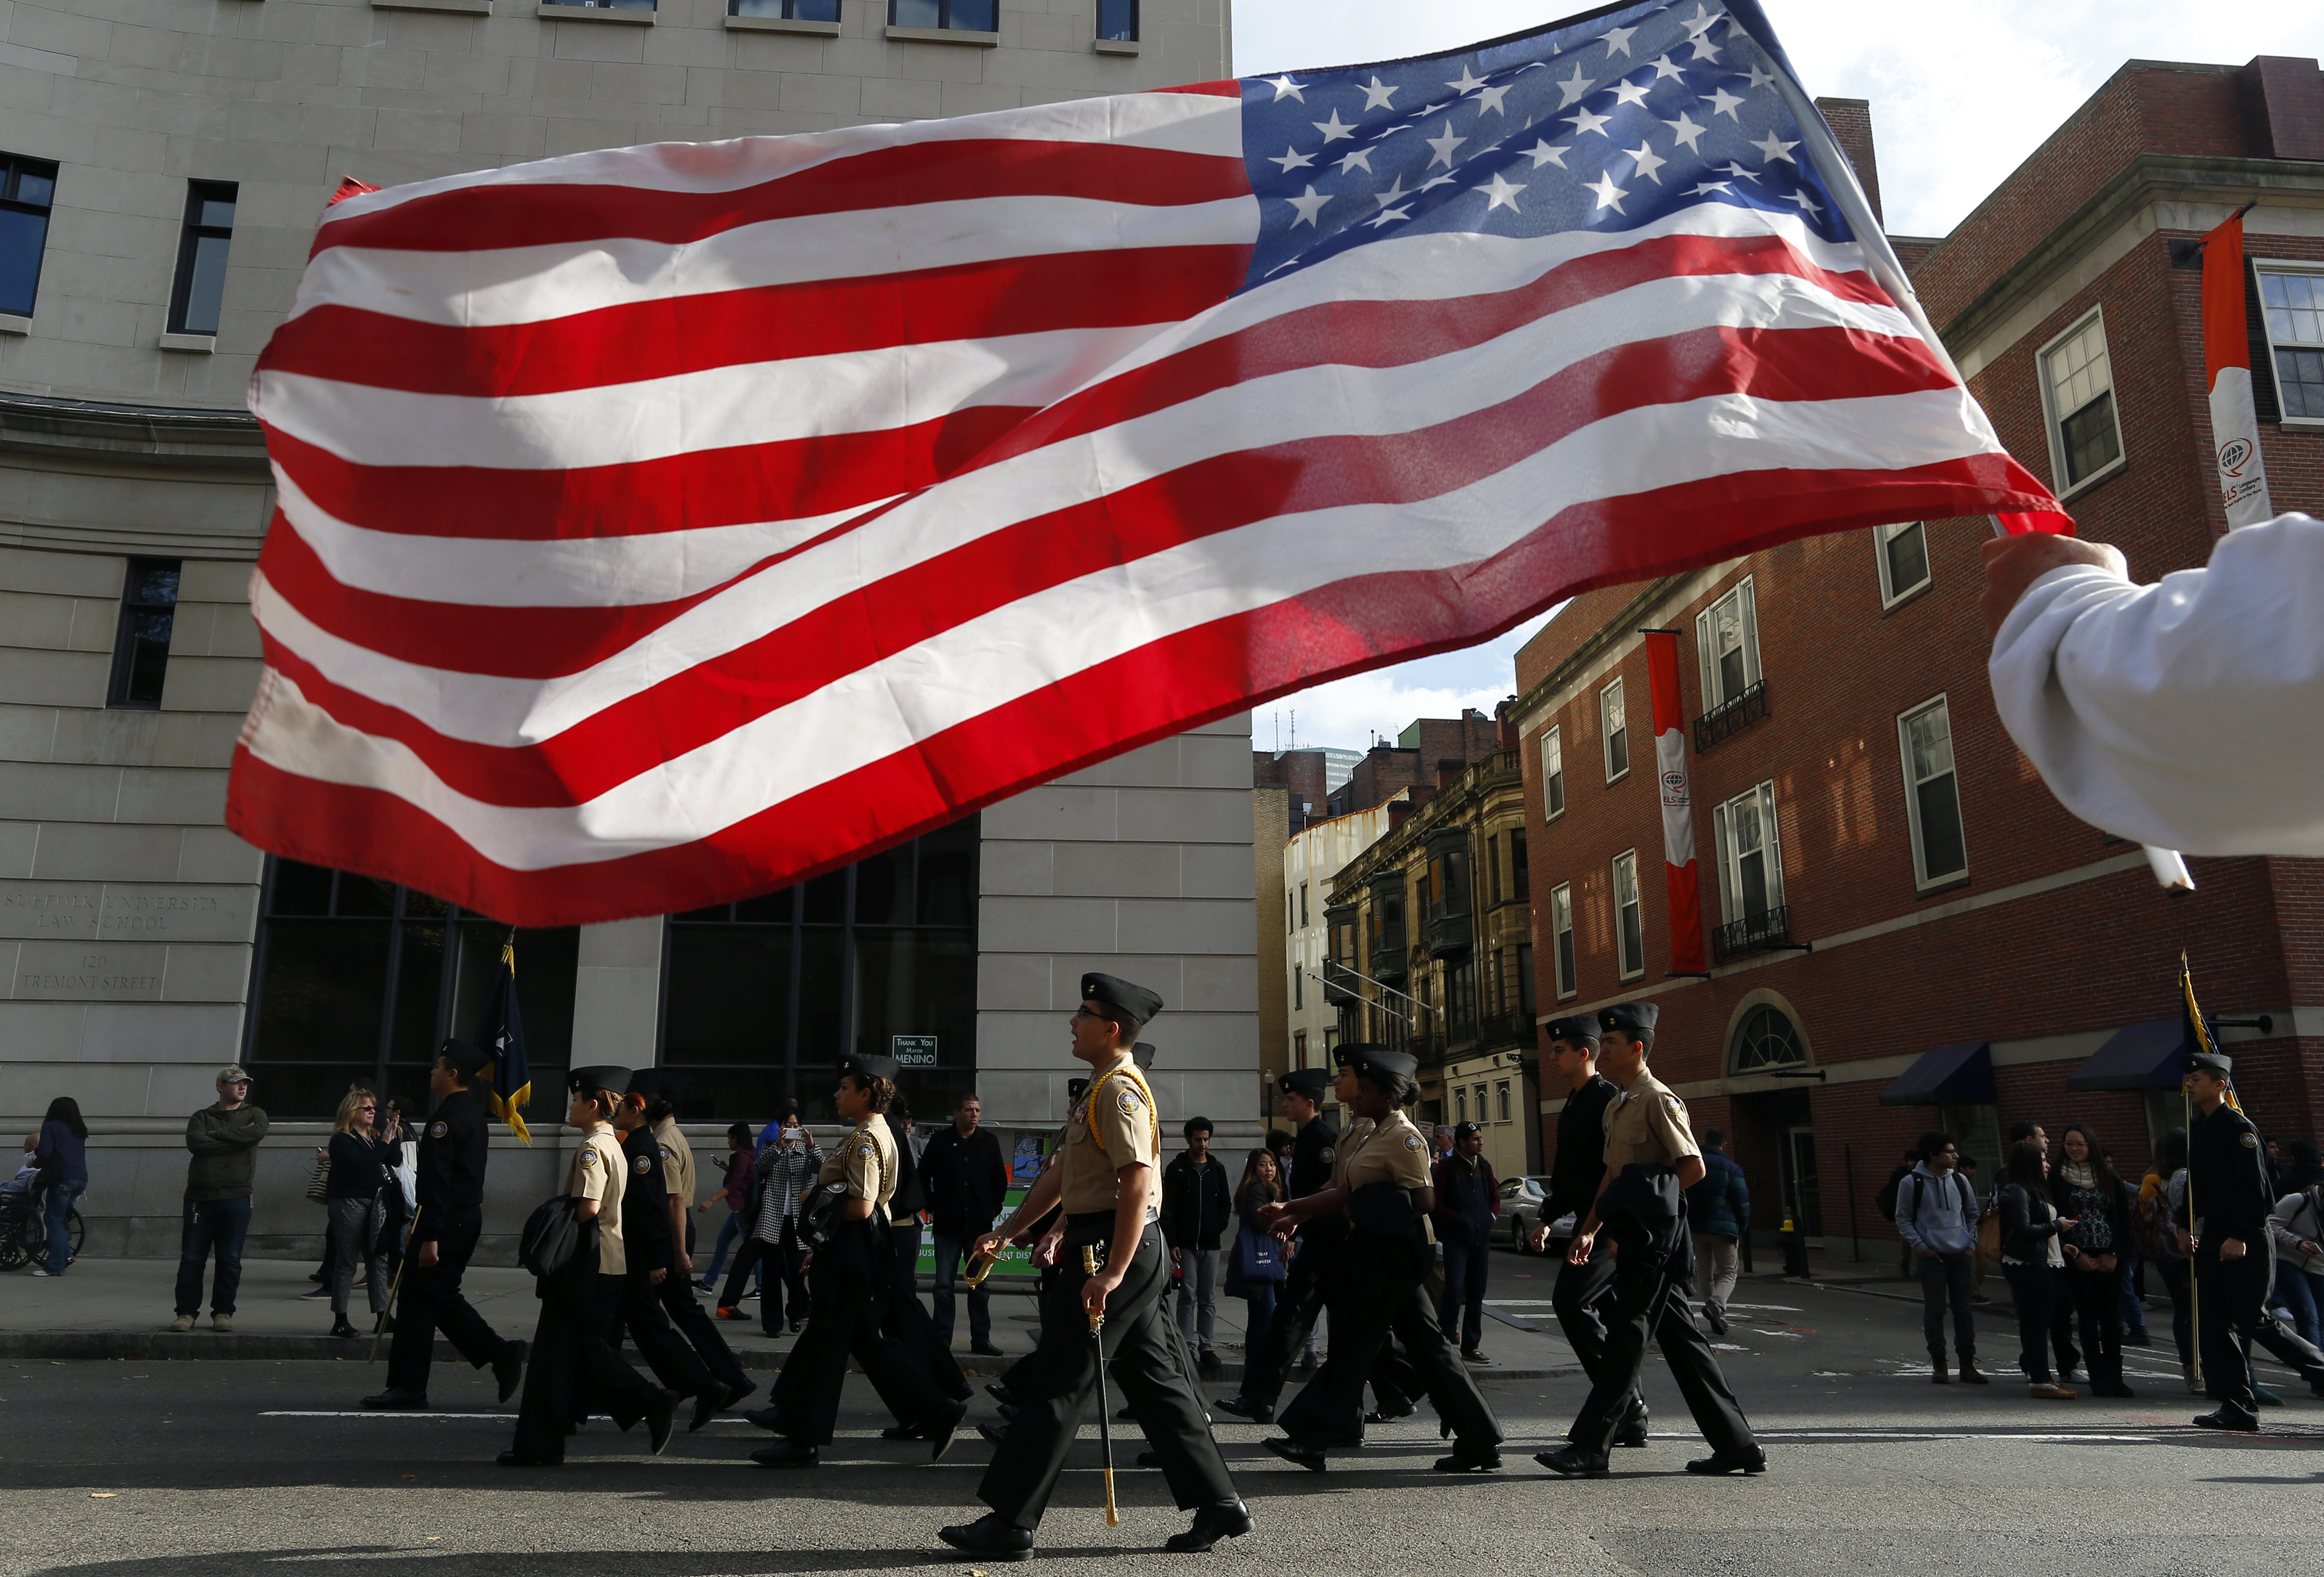 The Veterans Day Parade passes by in Boston on November 11, 2014. (Boston Globe&mdash;Boston Globe via Getty Images)